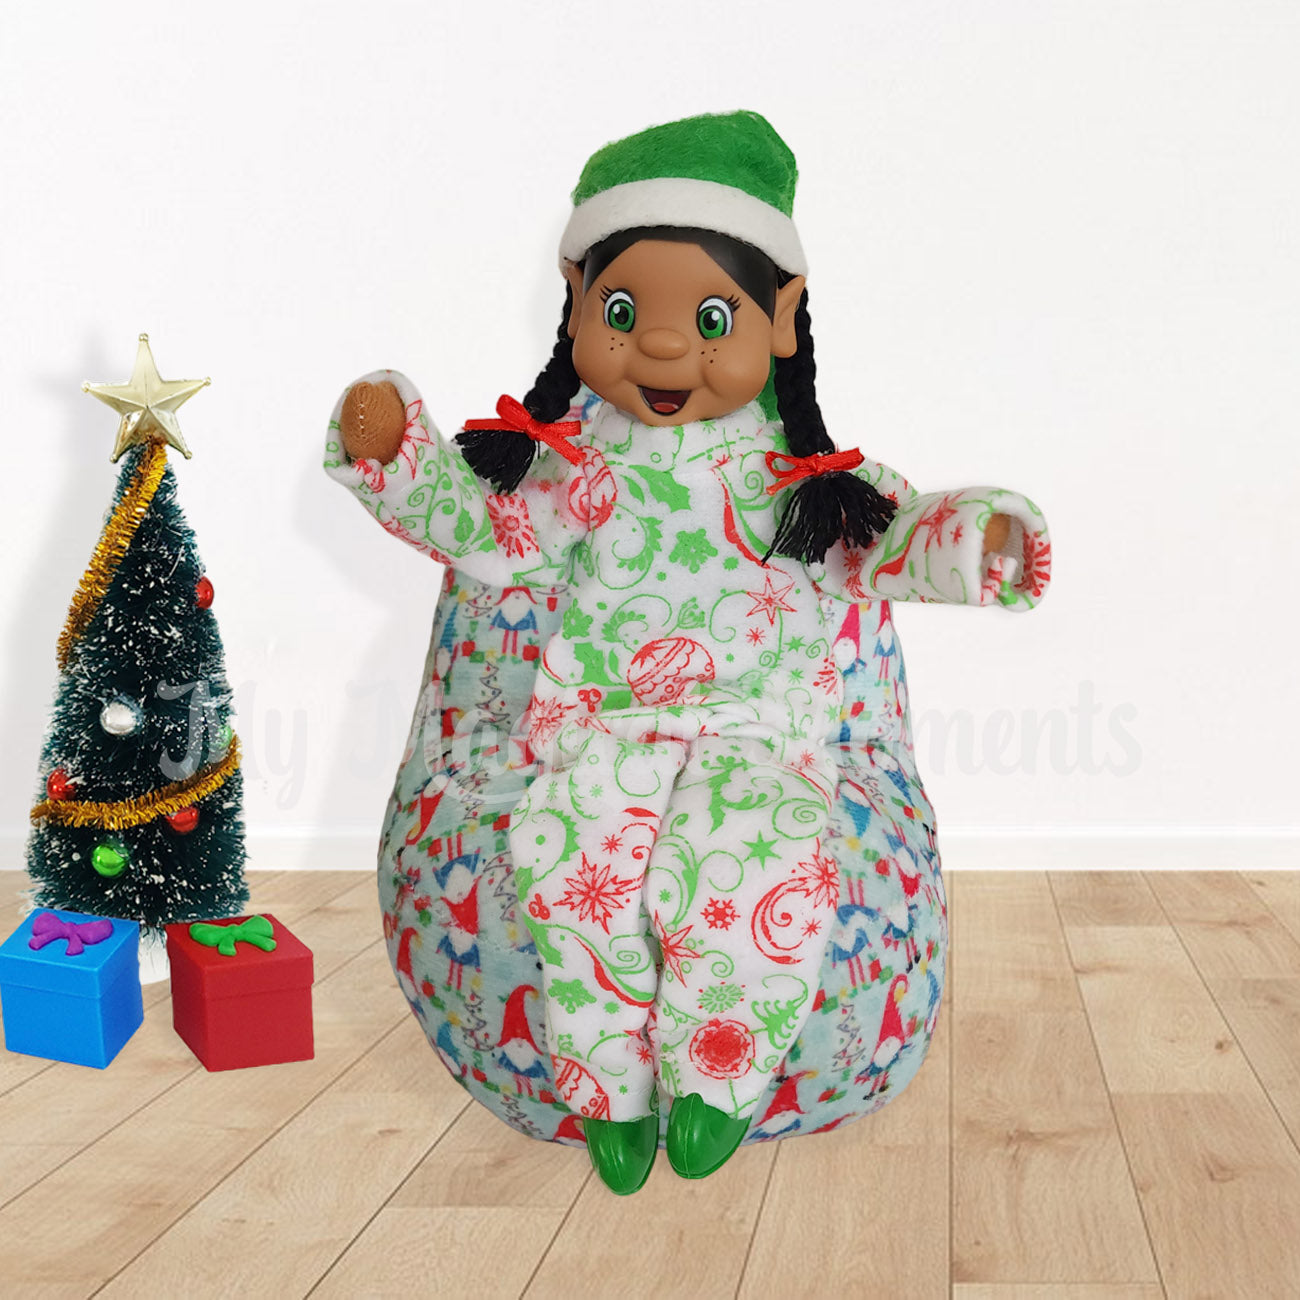 Black hair elf in pyjamas sitting on a bean bag with a Christmas tree